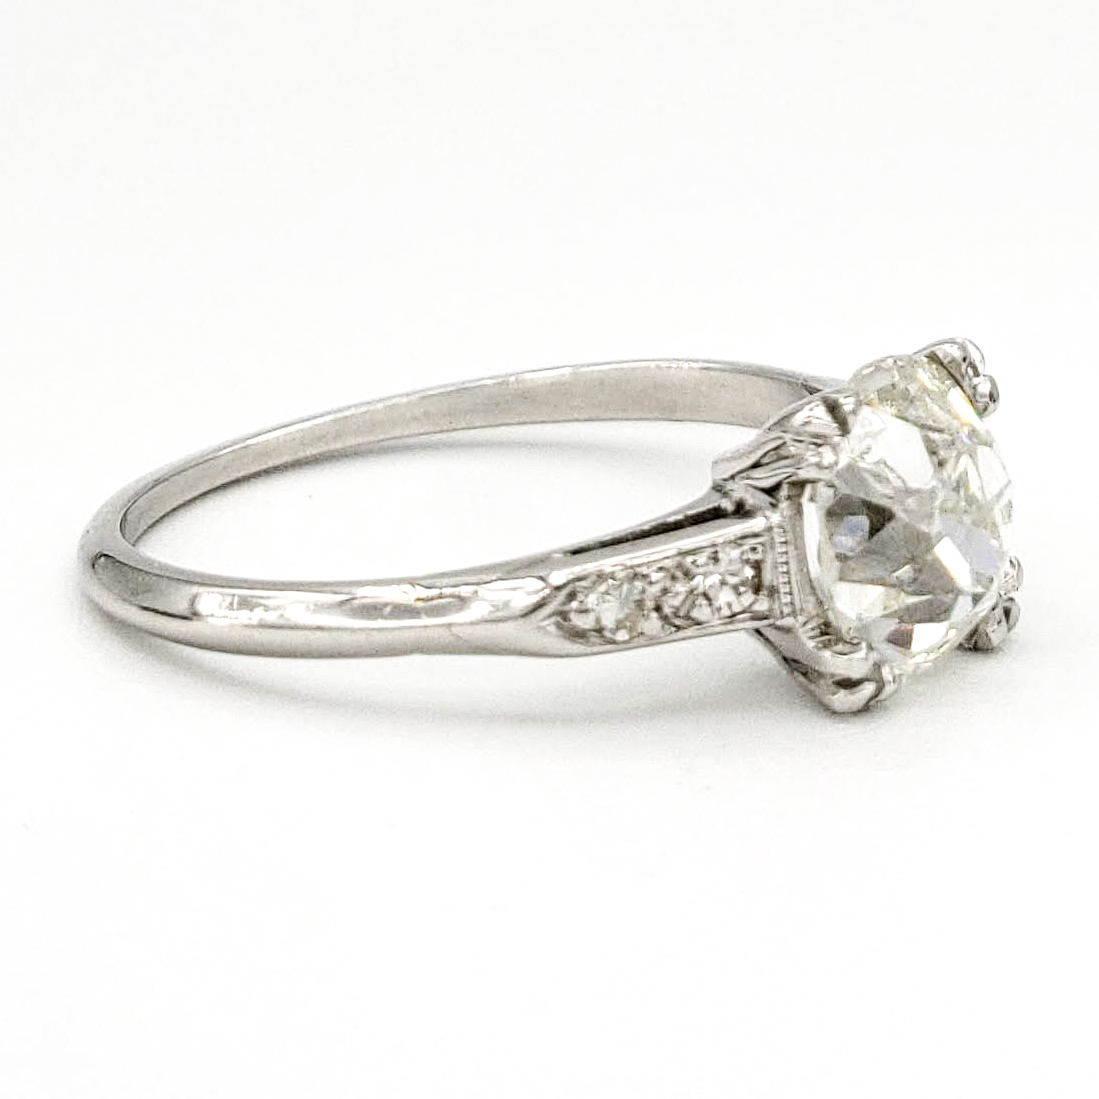 vintage-platinum-engagement-ring-with-1-19-old-mine-cut-diamond-egl-h-vs2